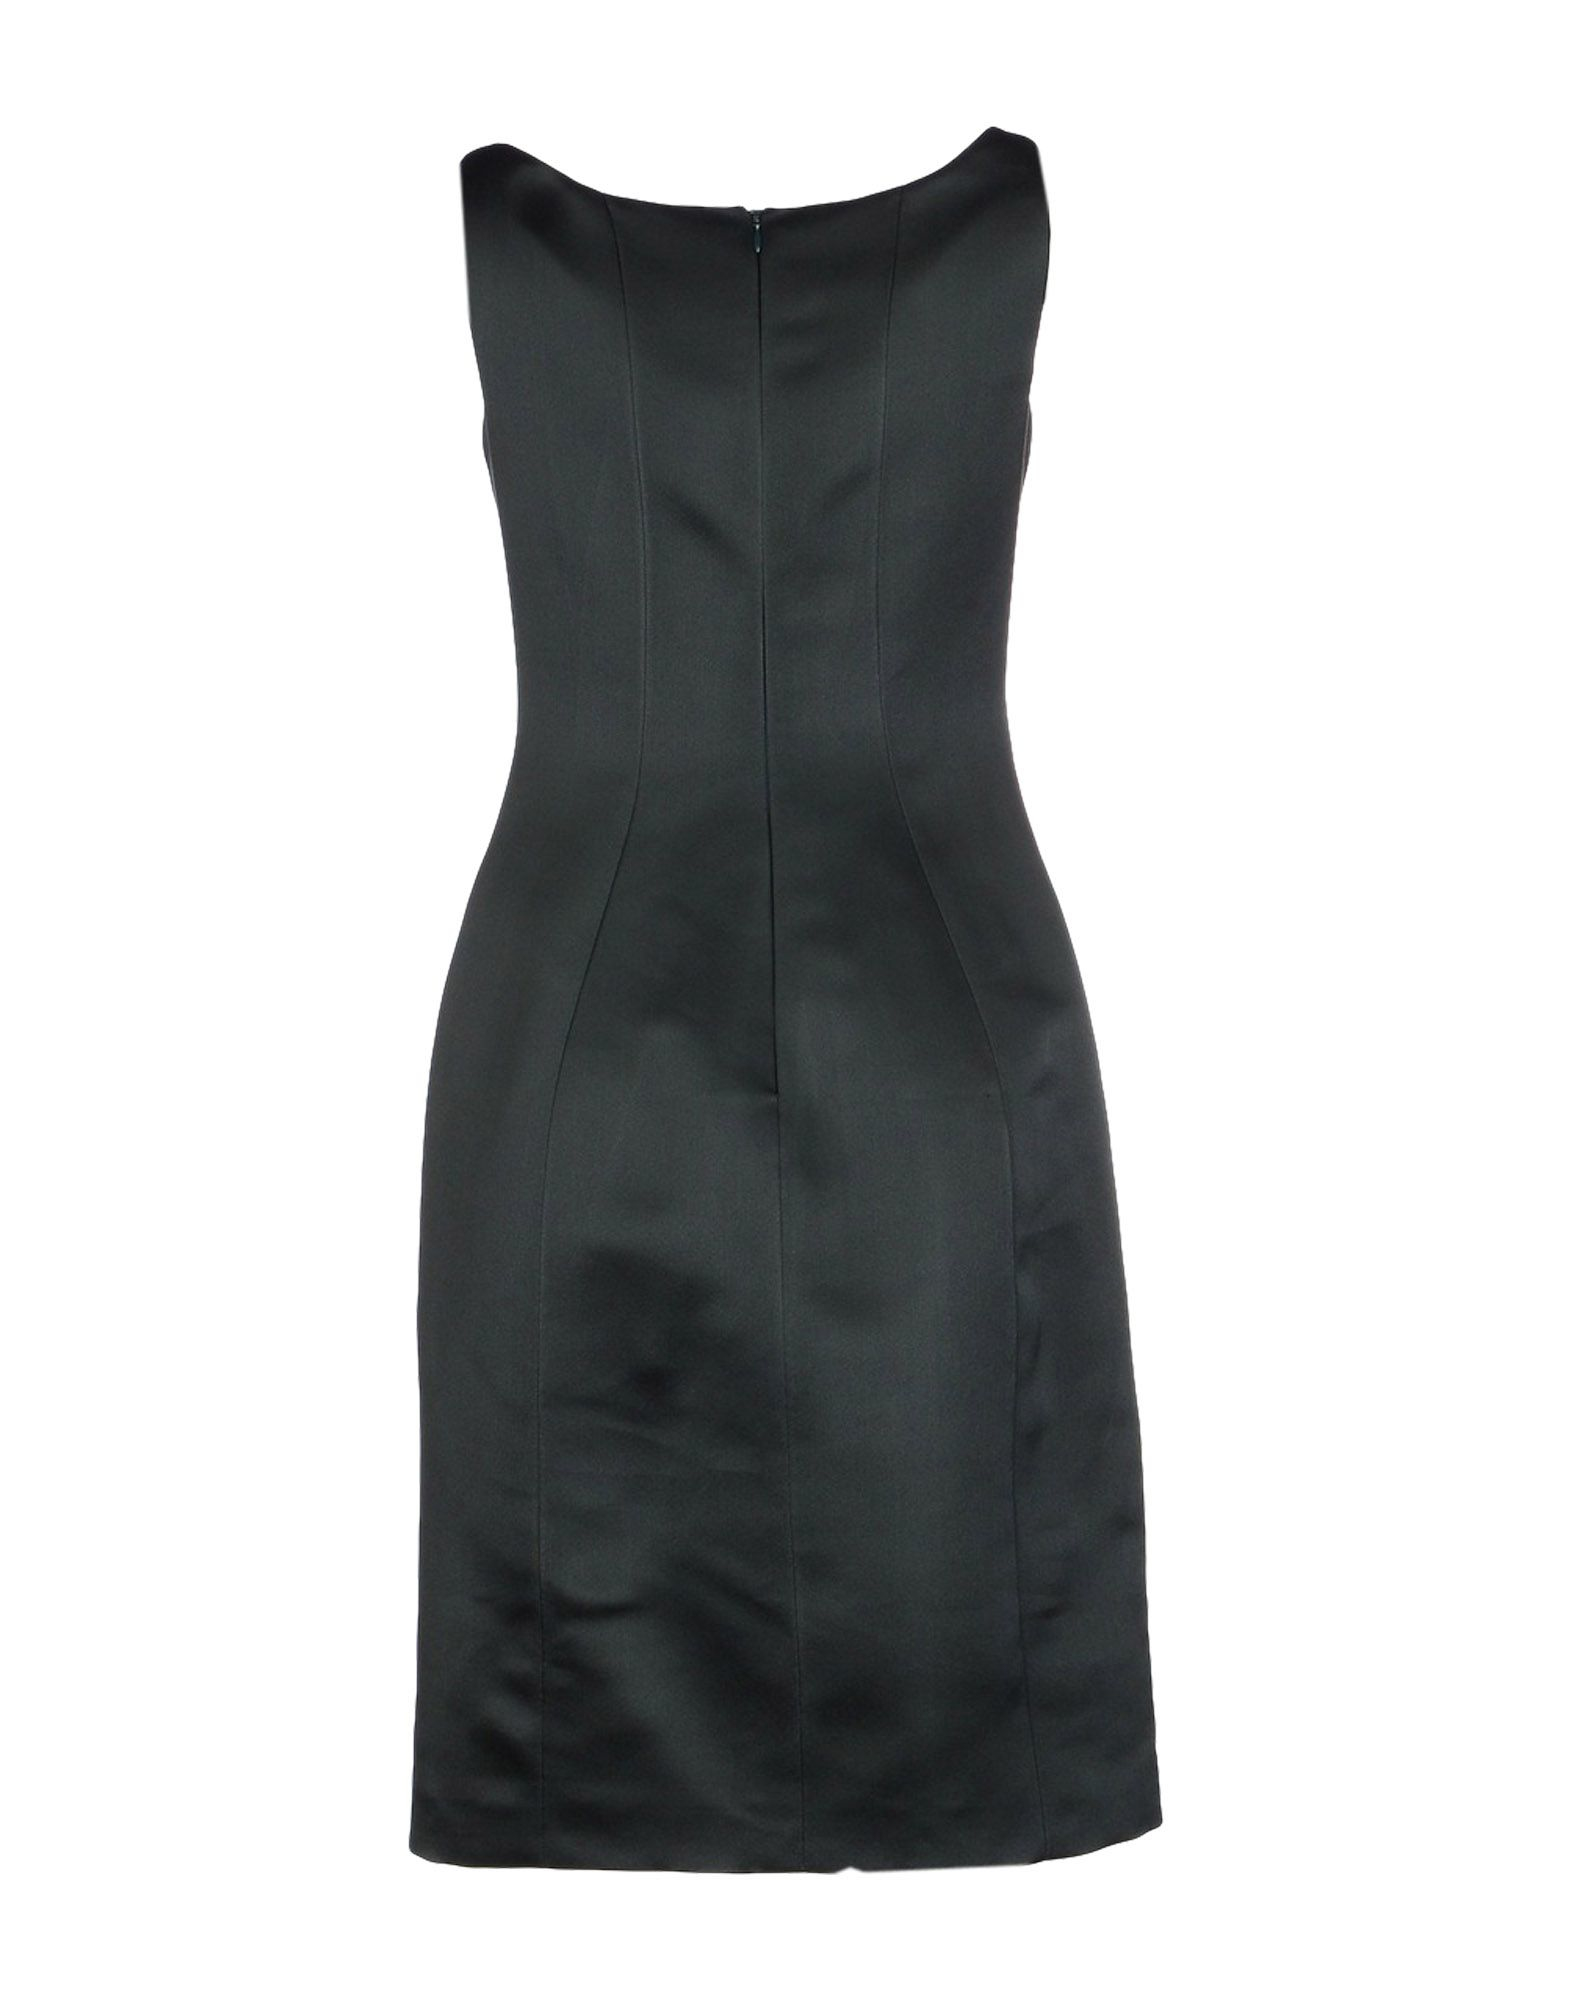 Lyst - Prada Short Dress in Black